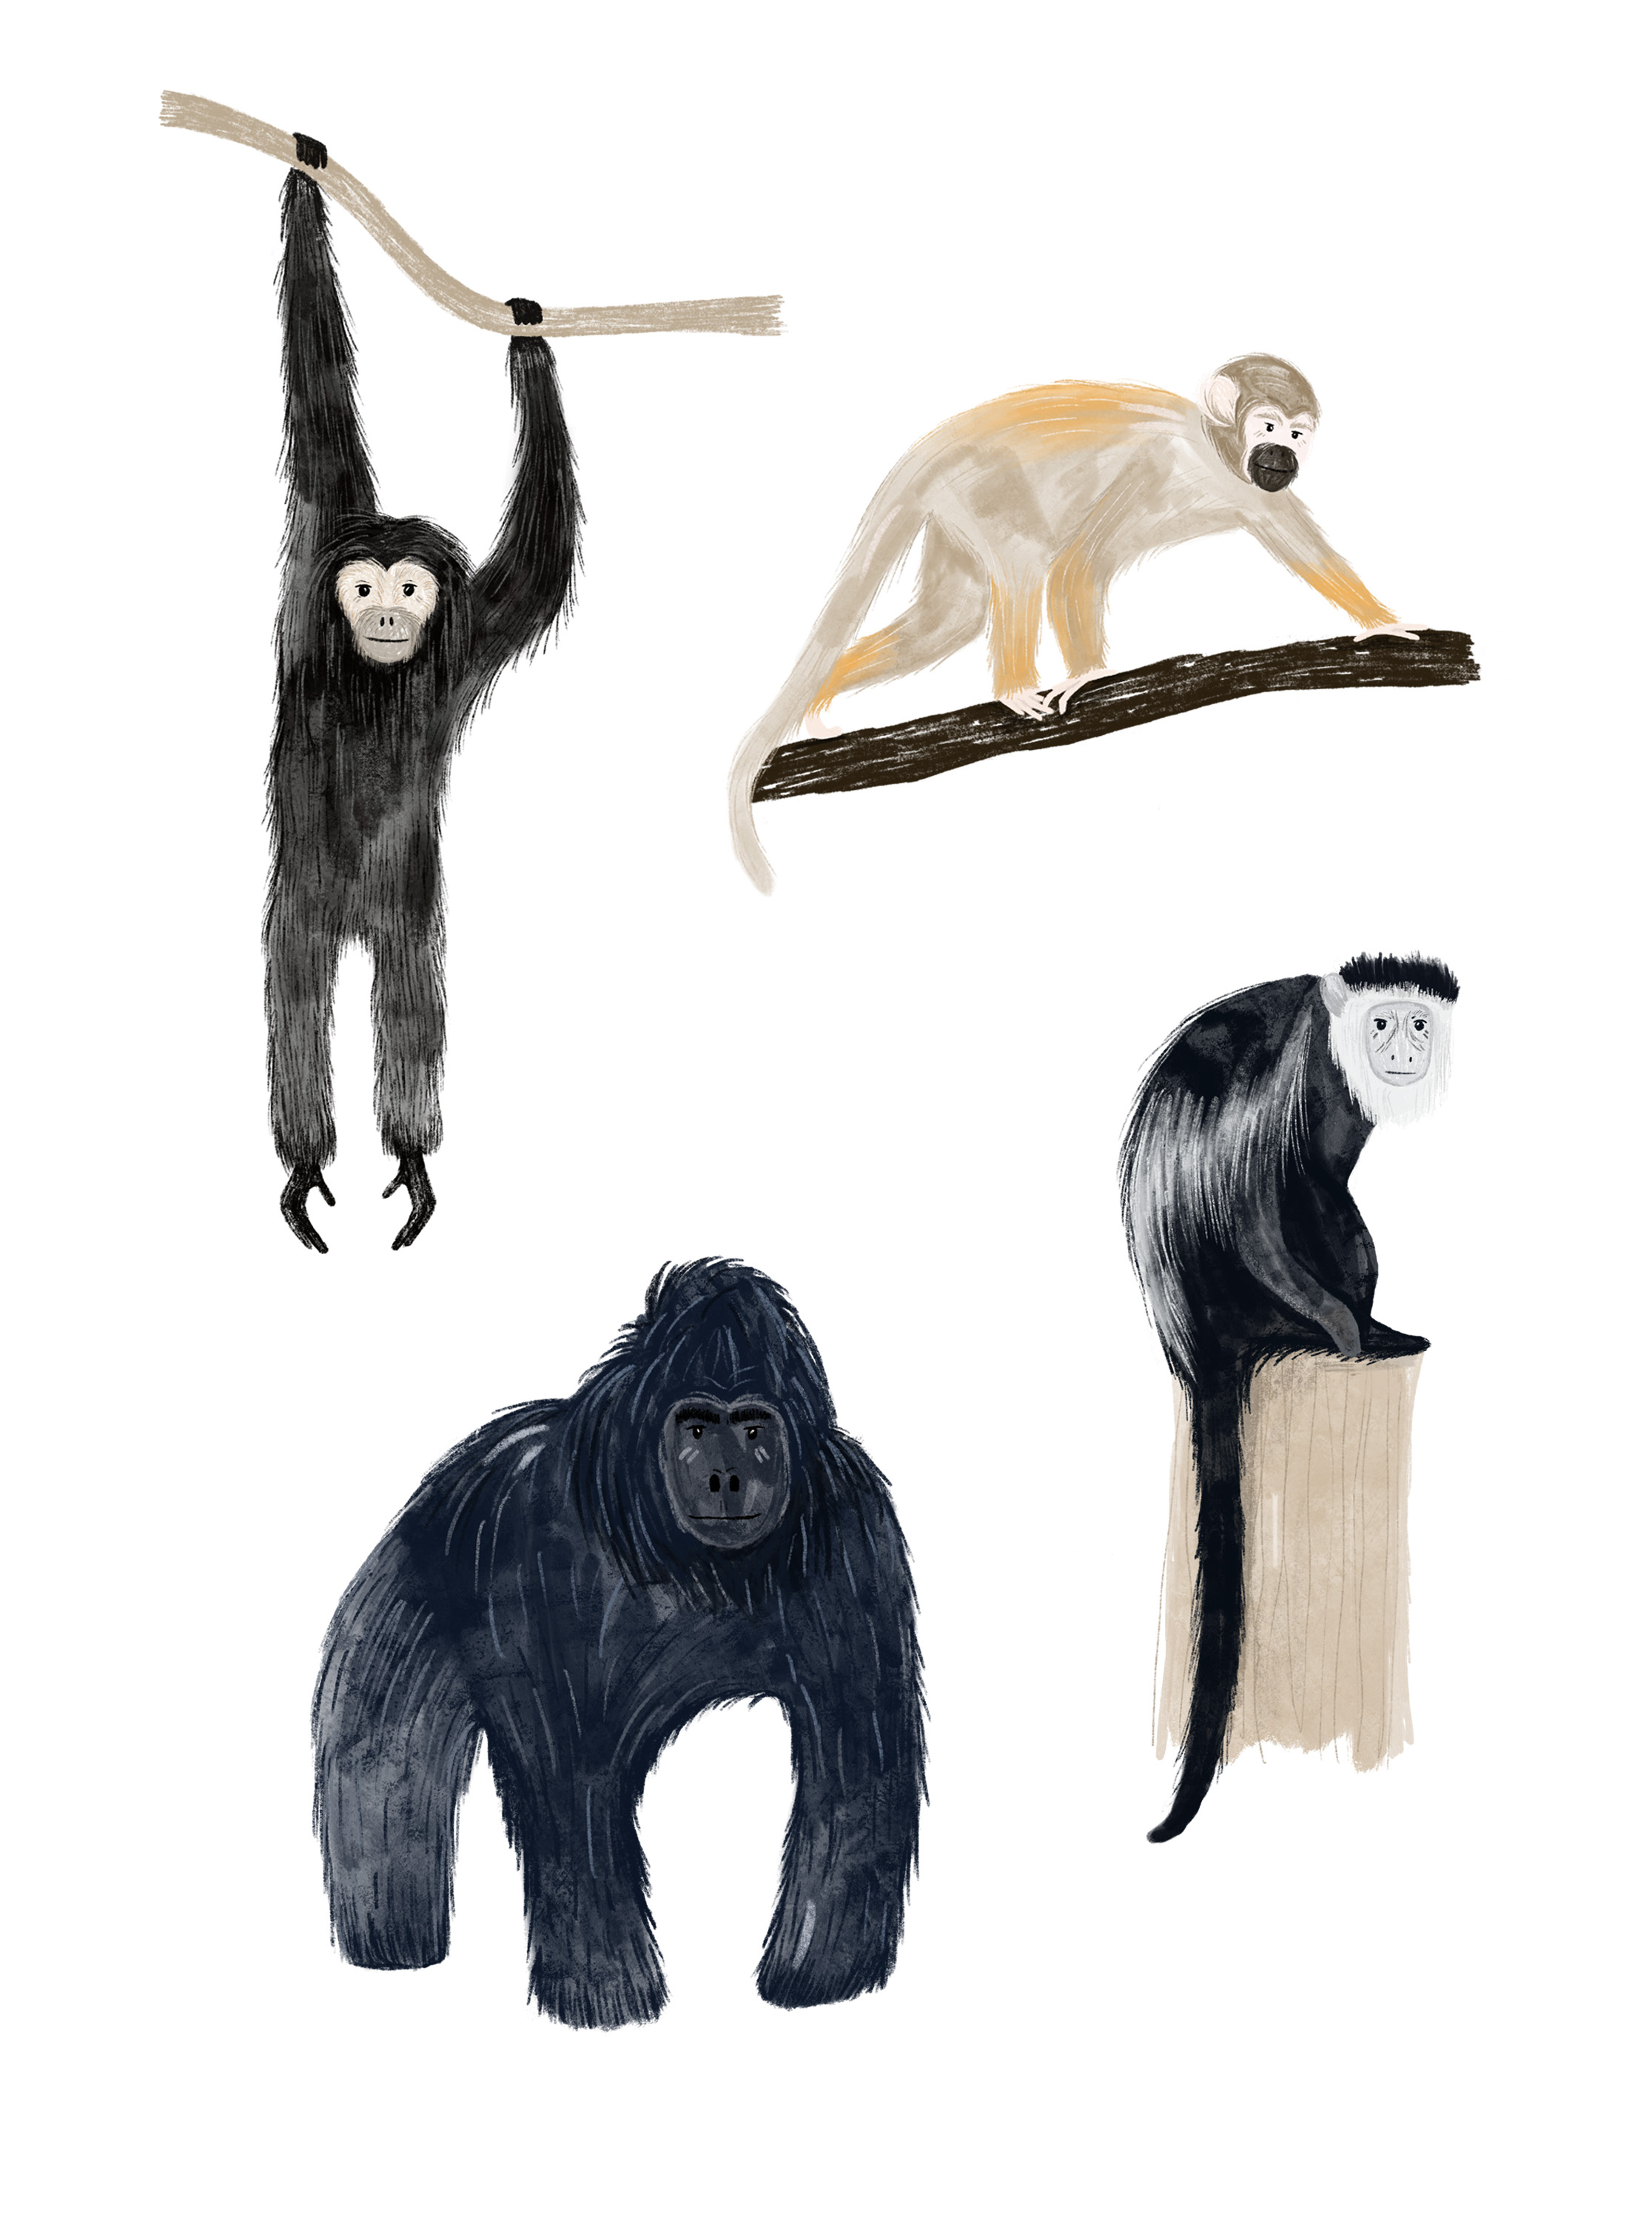 Illustration artwork of various primates